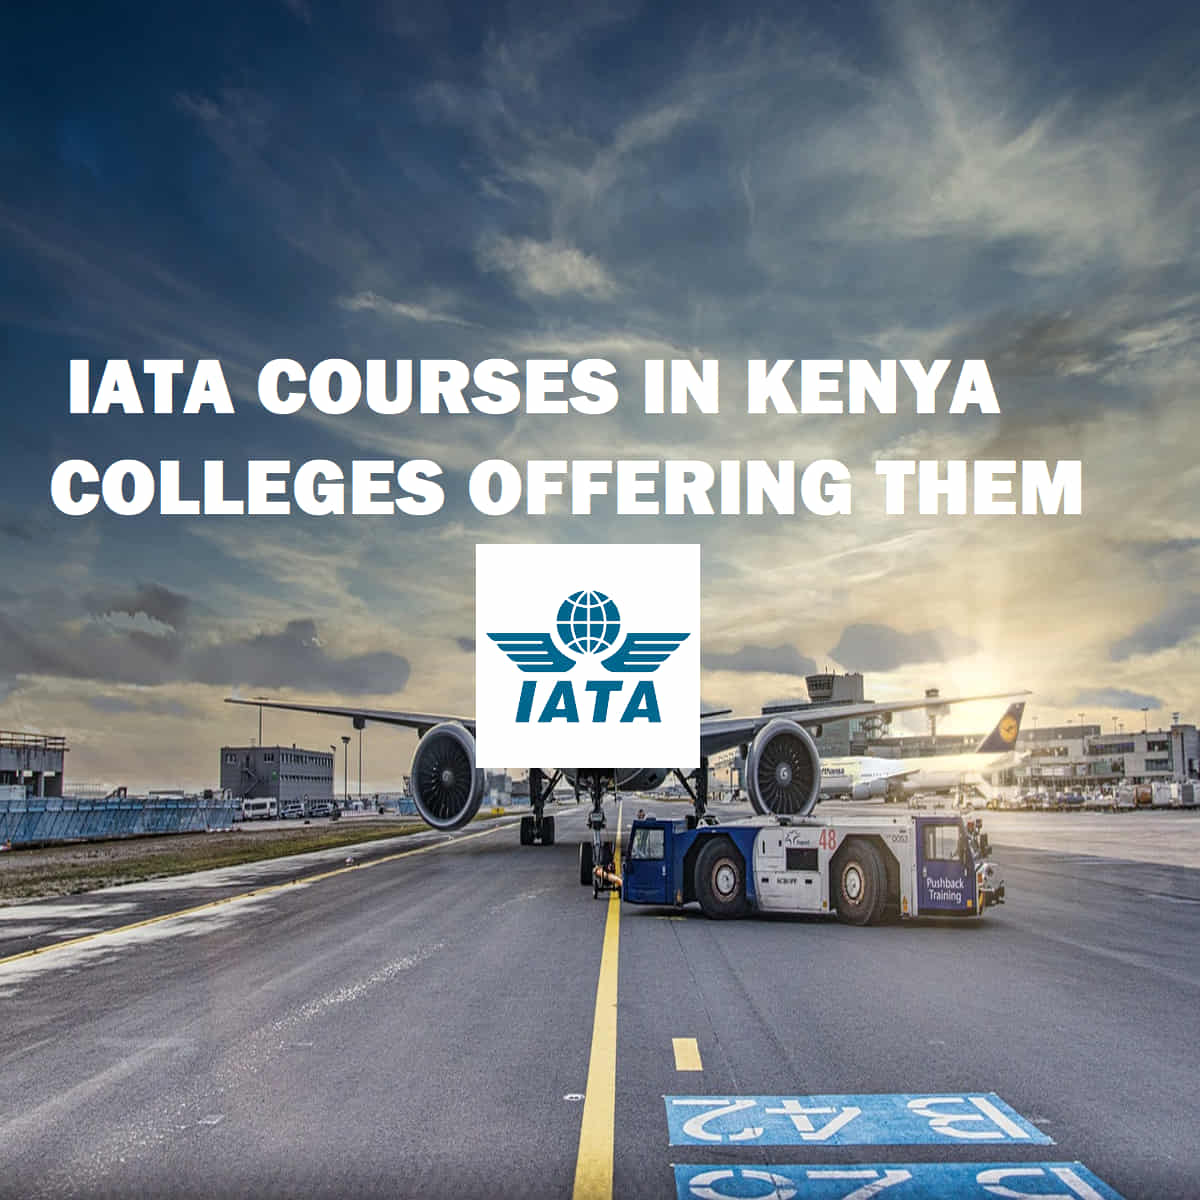 IATA courses in Kenya